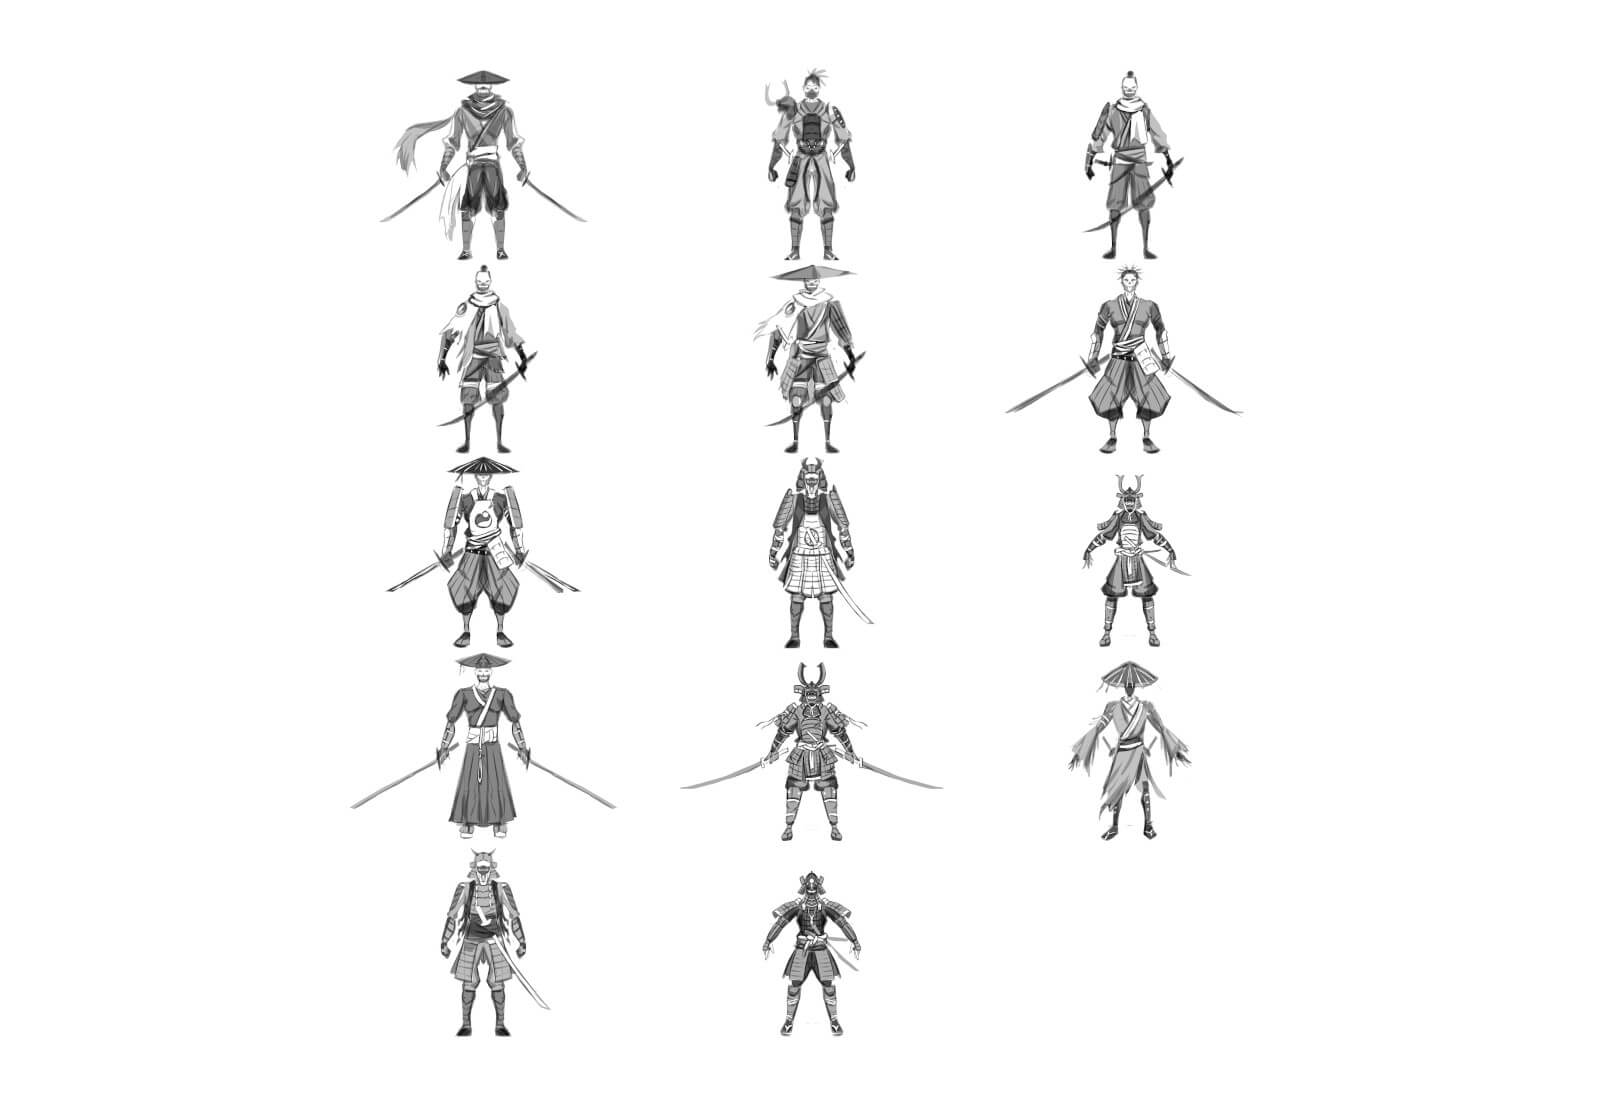 Samurai character sketches